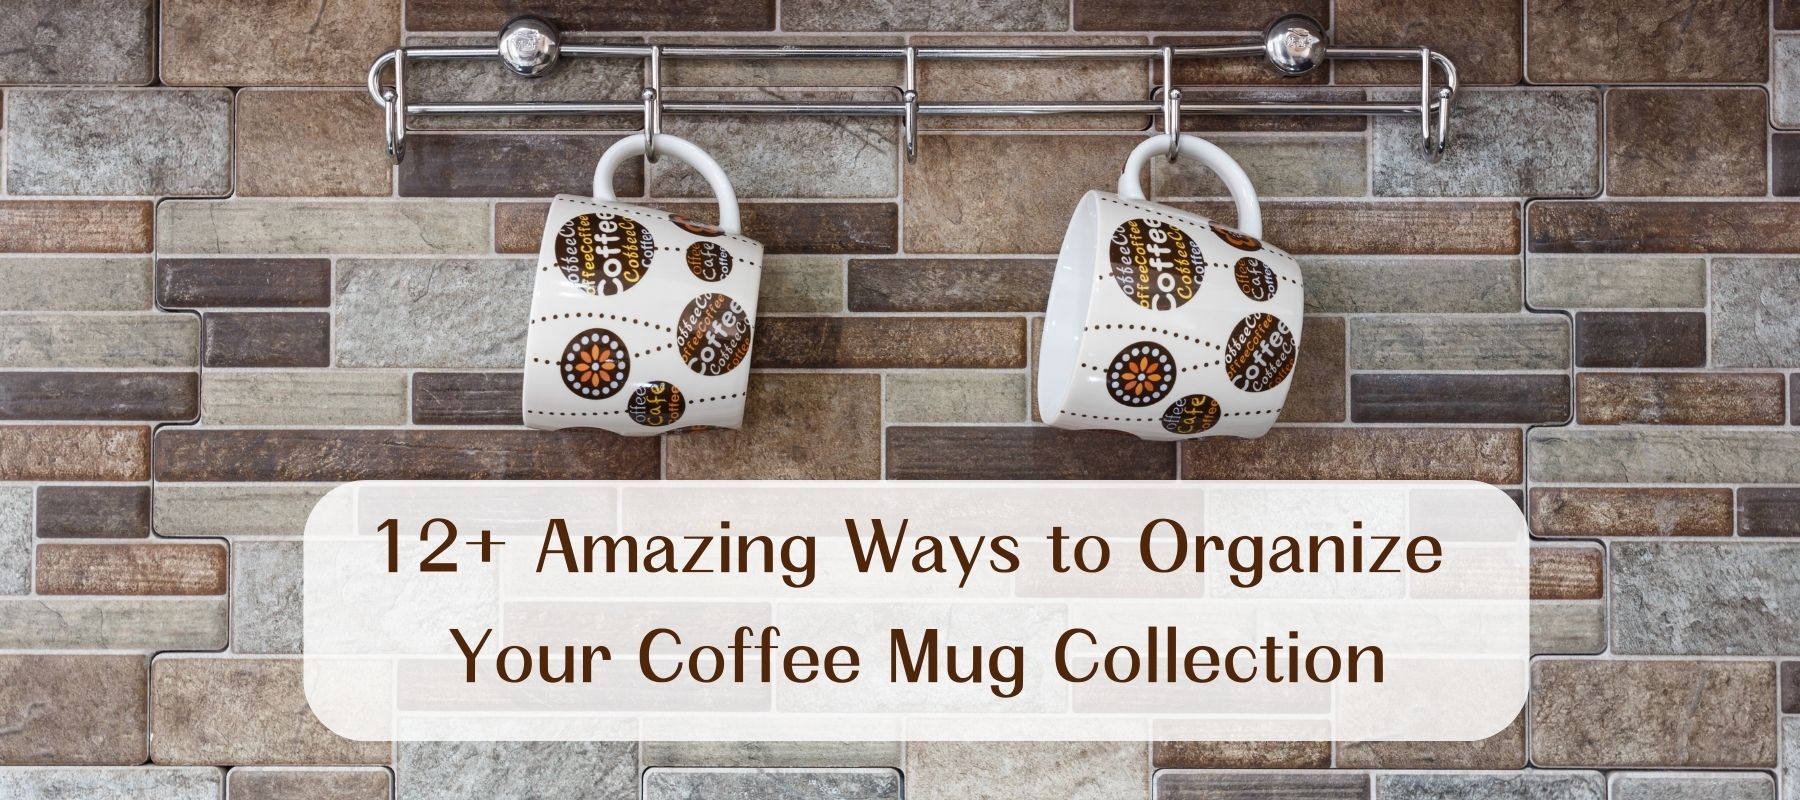 How-to-organize-coffee-mugs